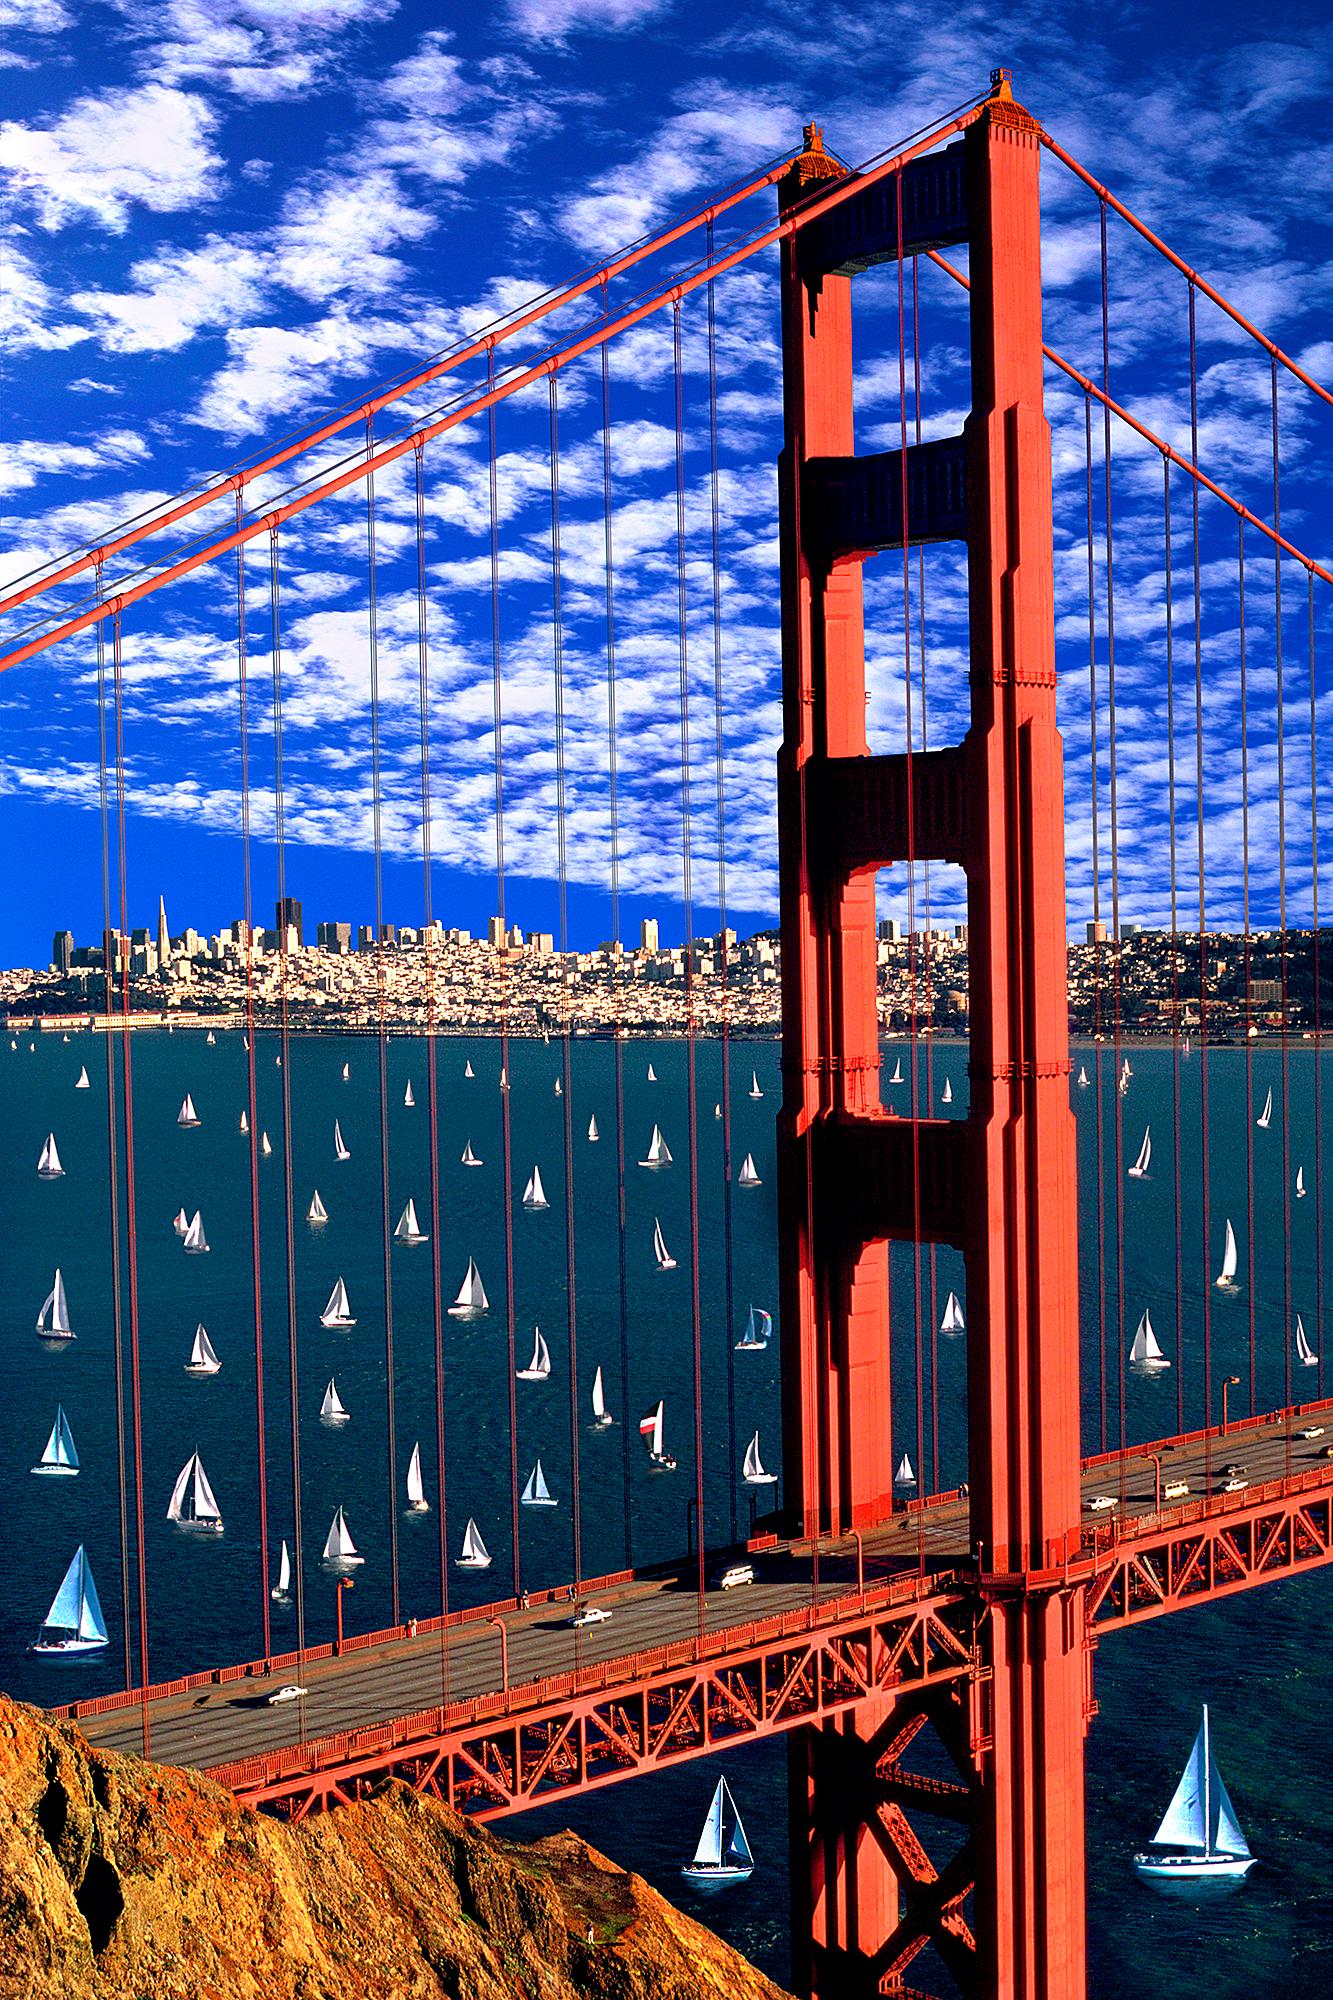 Golden Gate Bridge San Francisco Bay with Sailboats 